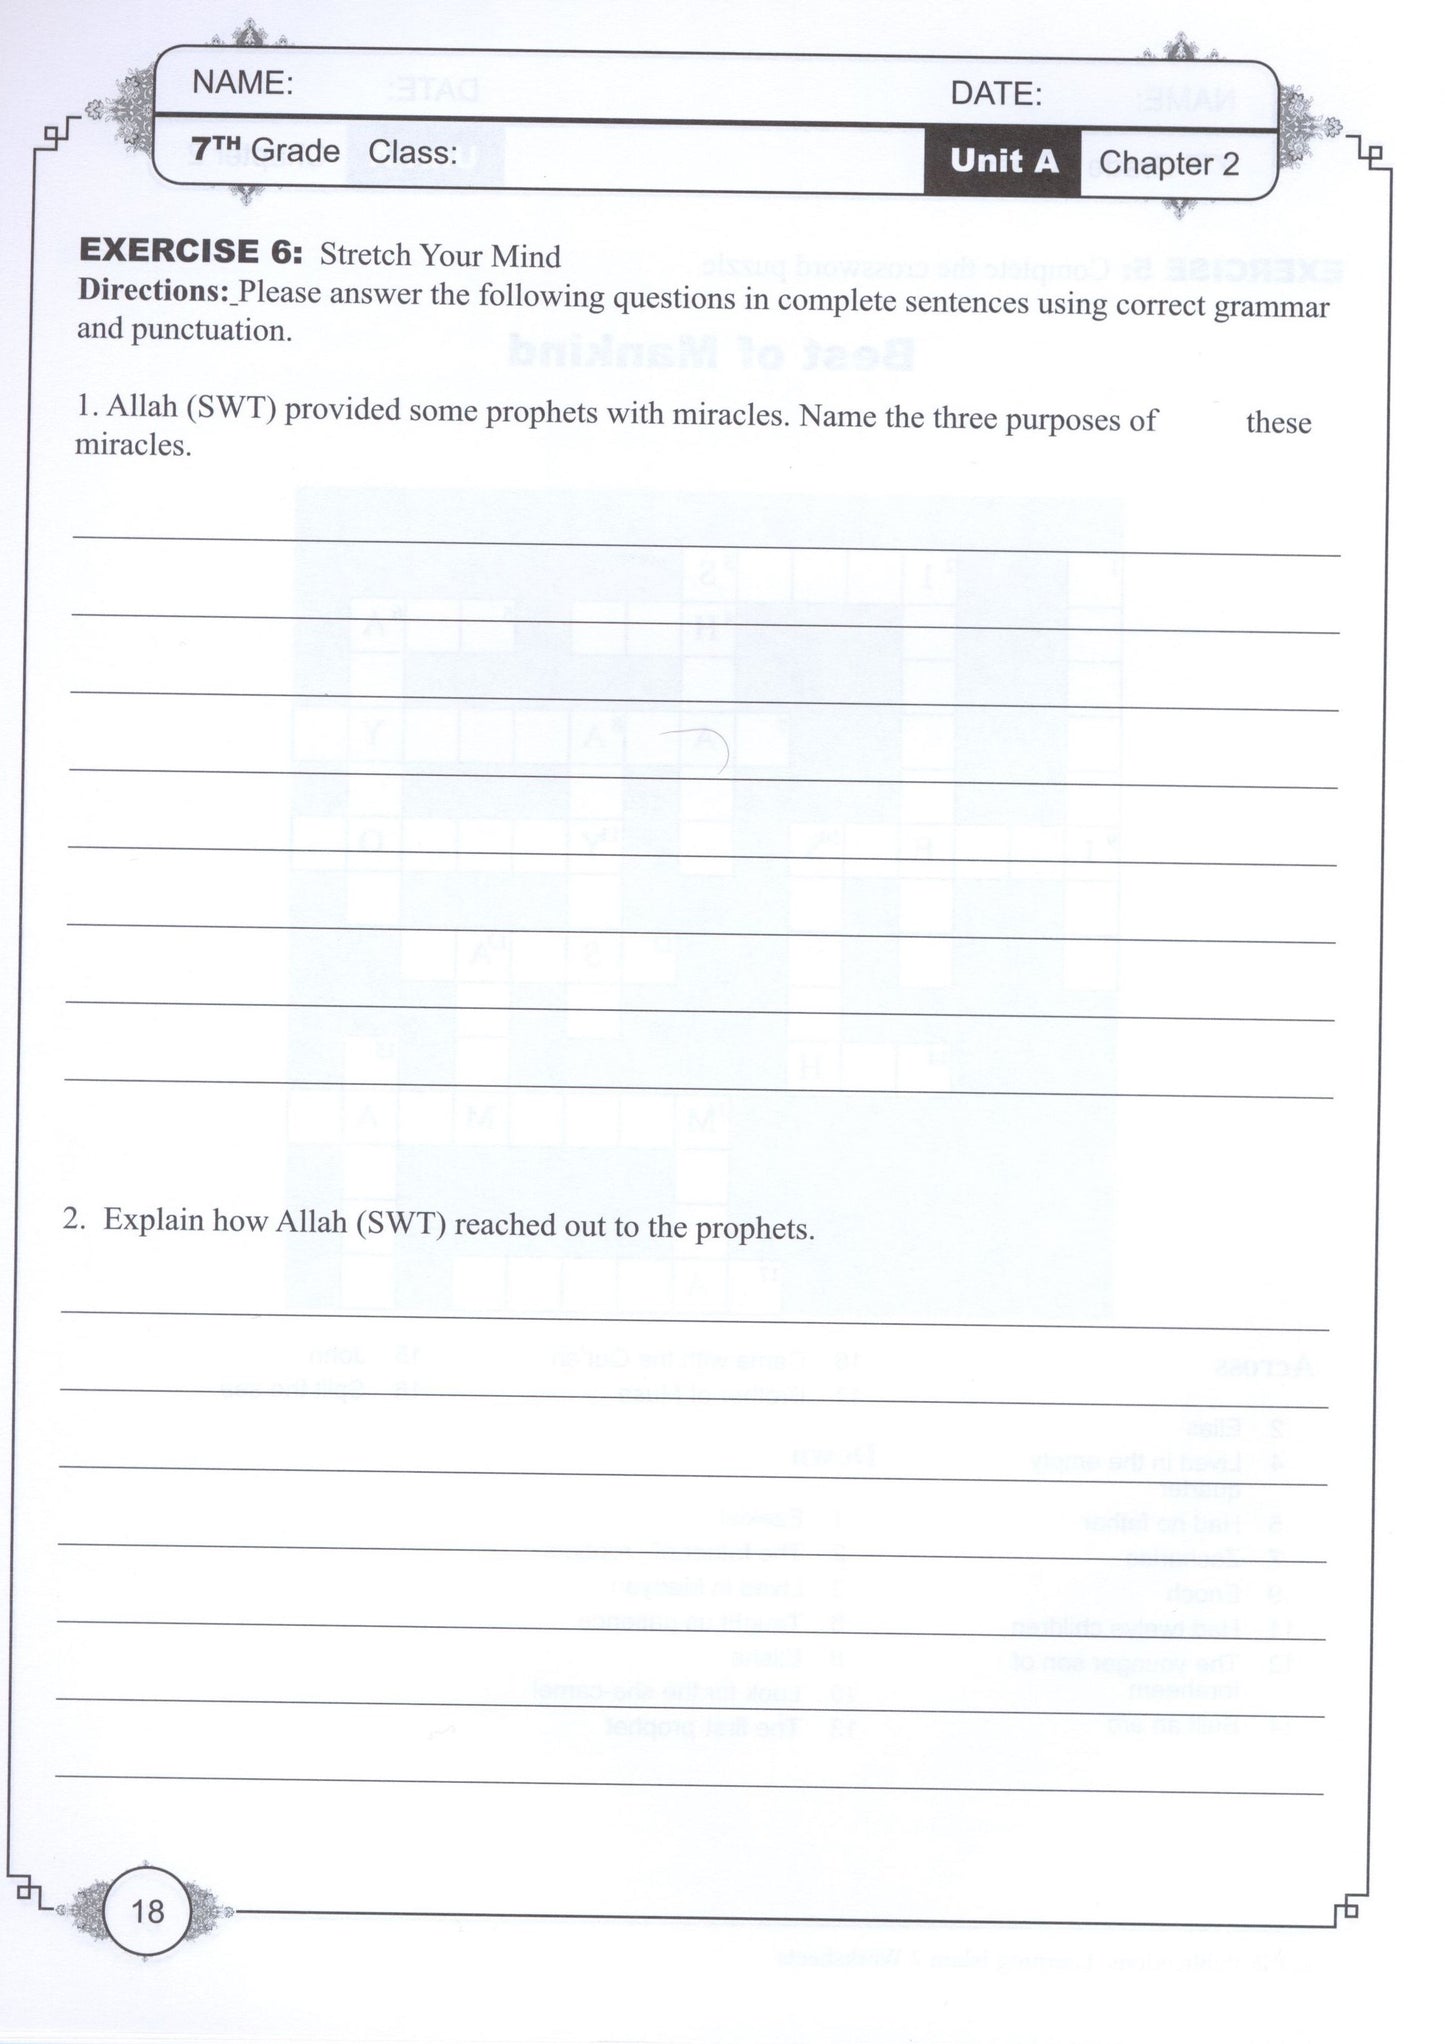 Learning Islam Workbook Level 2 (Grade 7)